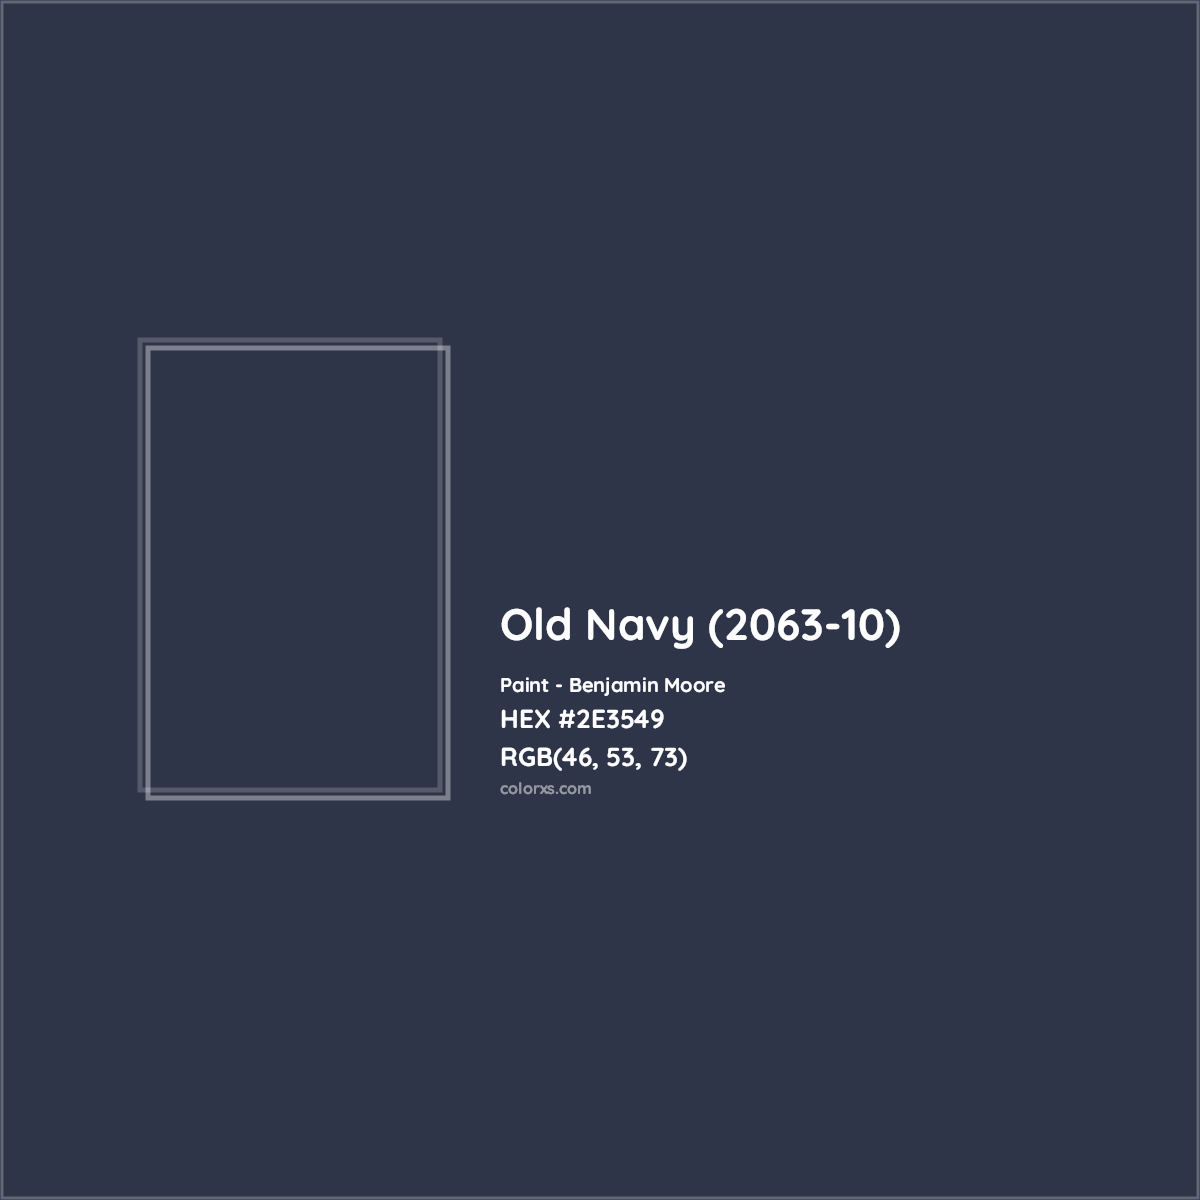 HEX #2E3549 Old Navy (2063-10) Paint Benjamin Moore - Color Code